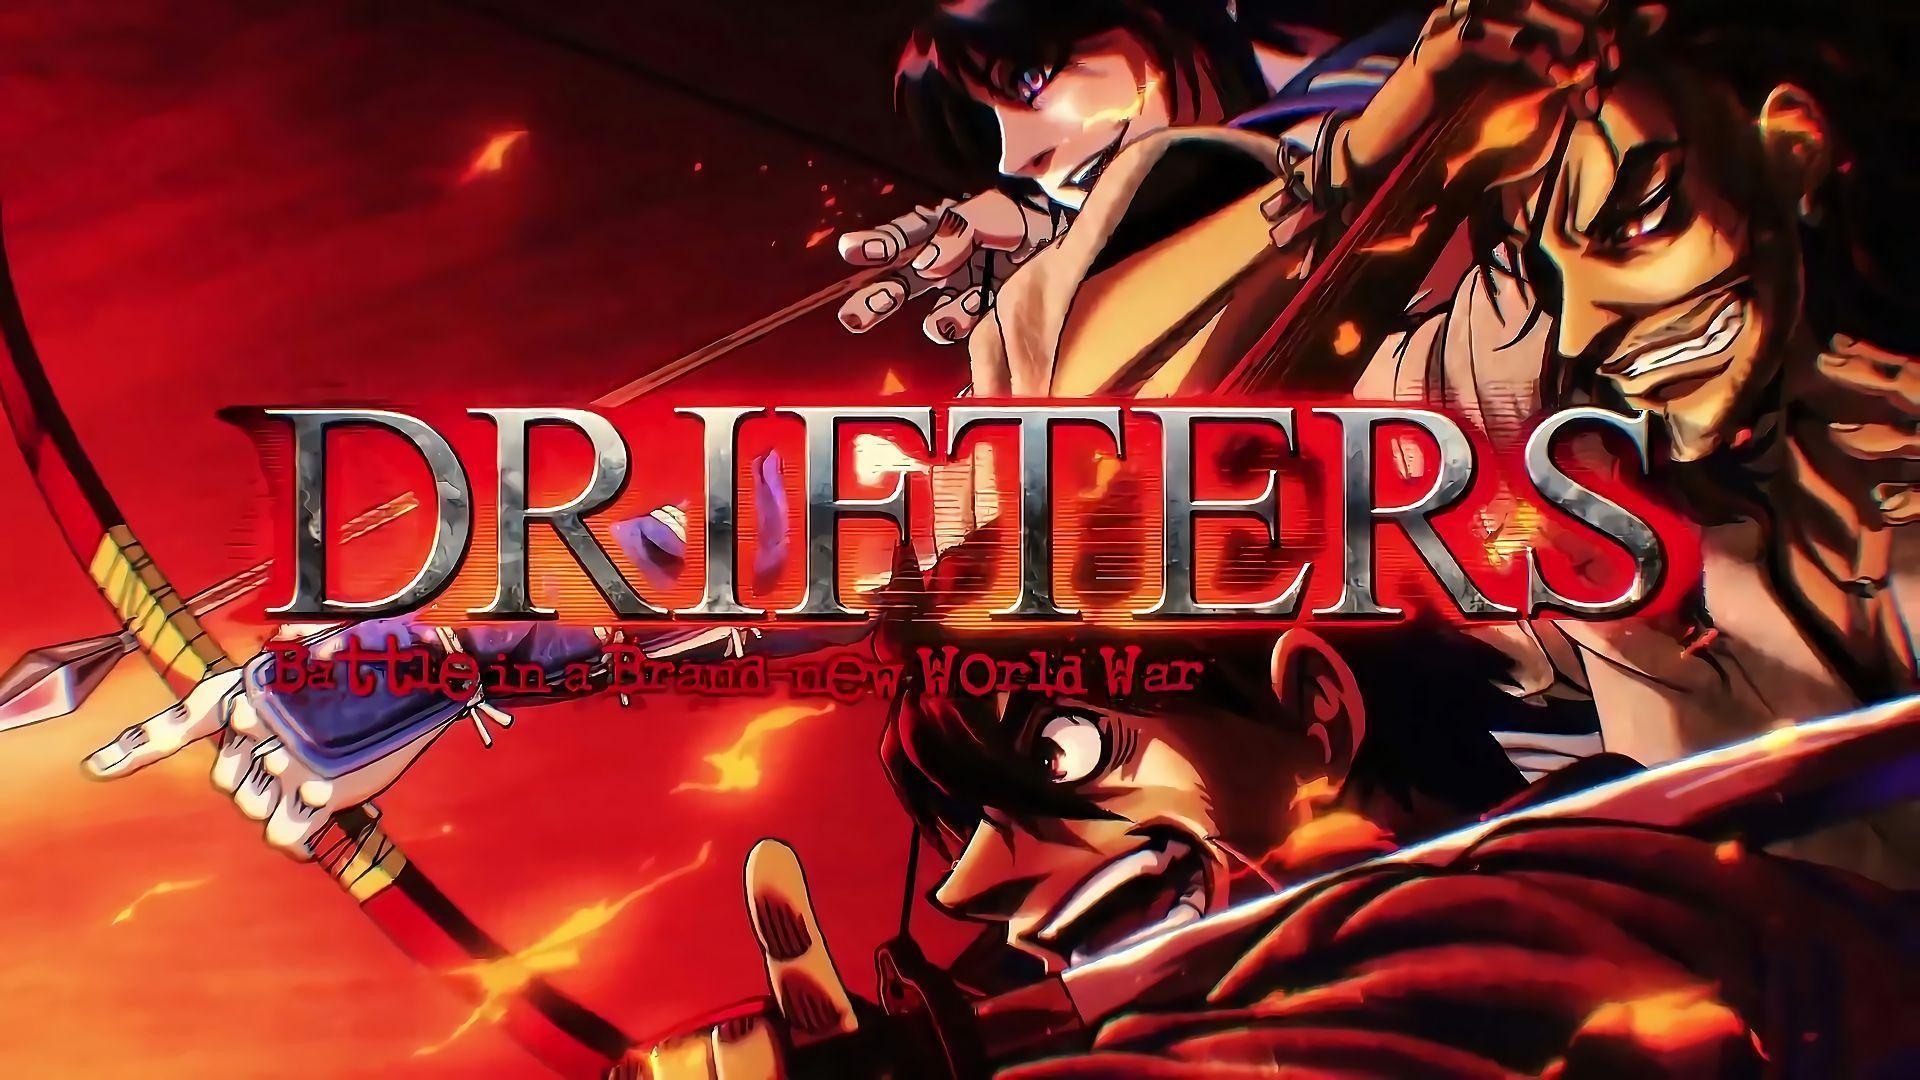 HD desktop wallpaper: Anime, Drifters download free picture #777114